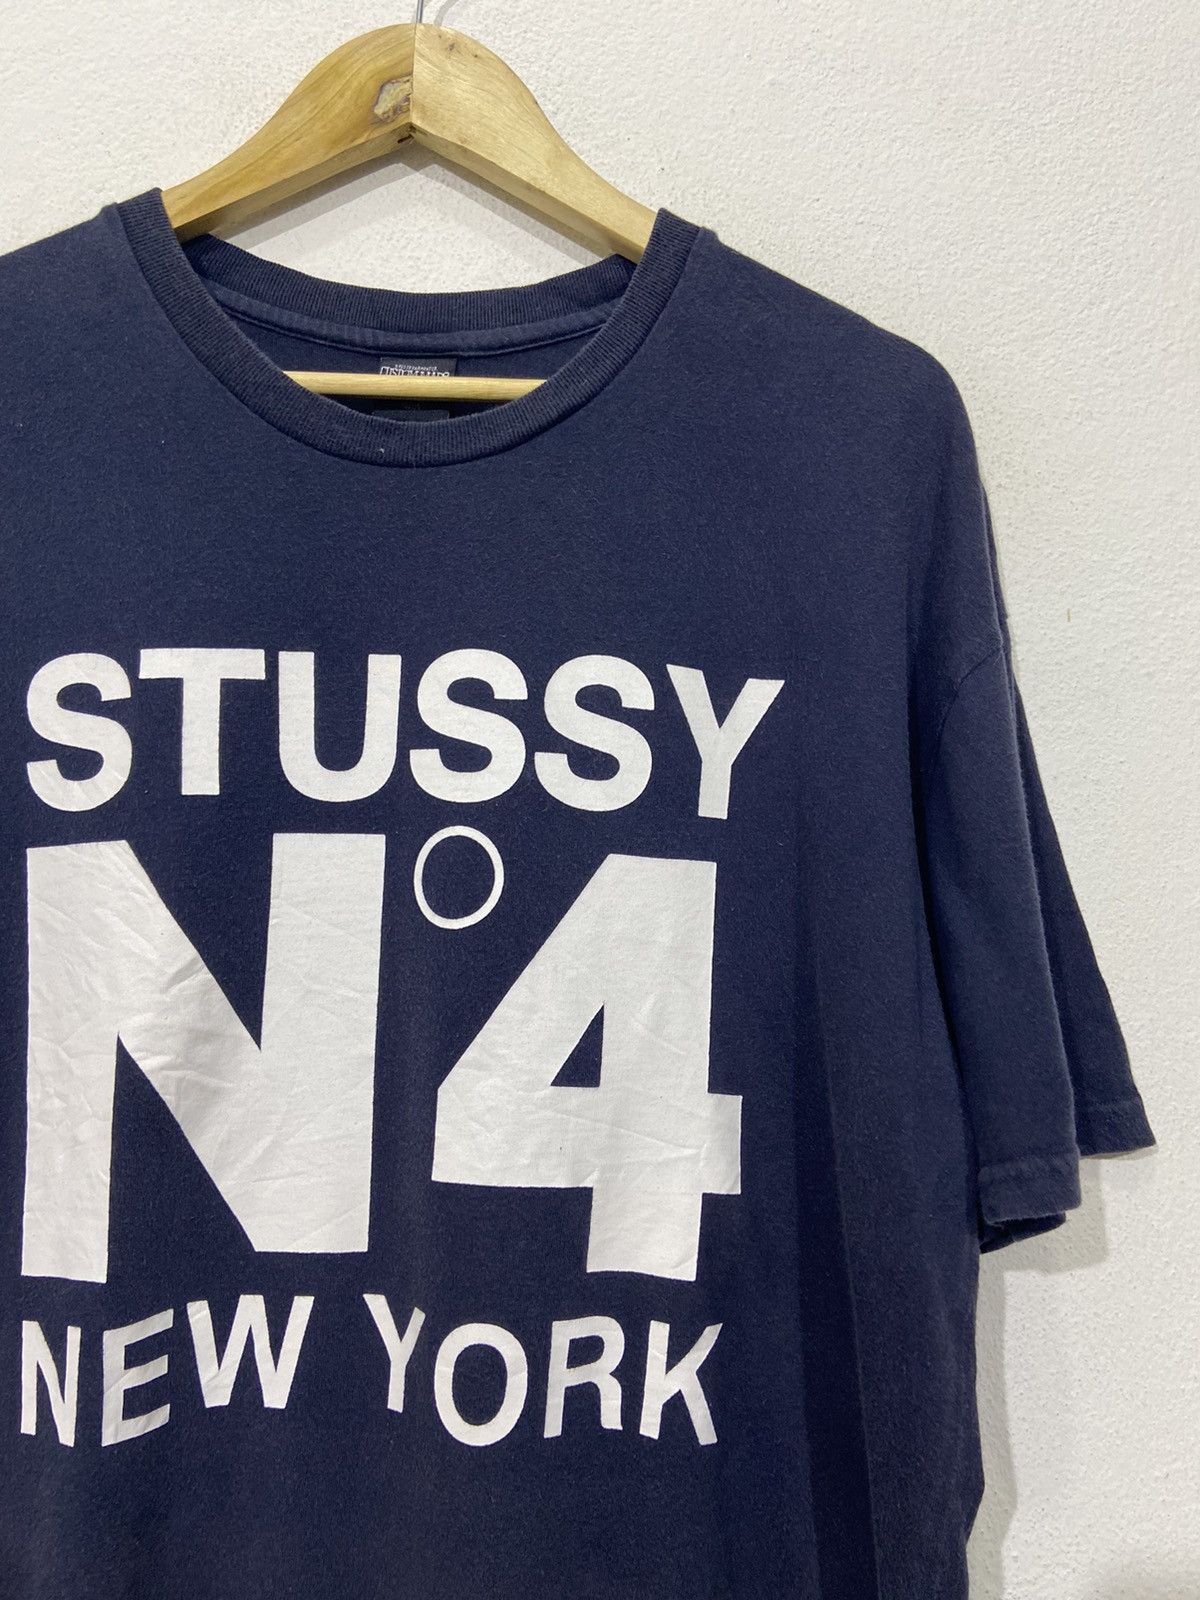 Stussy Stussy Custom Made New York Tshirt Size US M / EU 48-50 / 2 - 4 Thumbnail